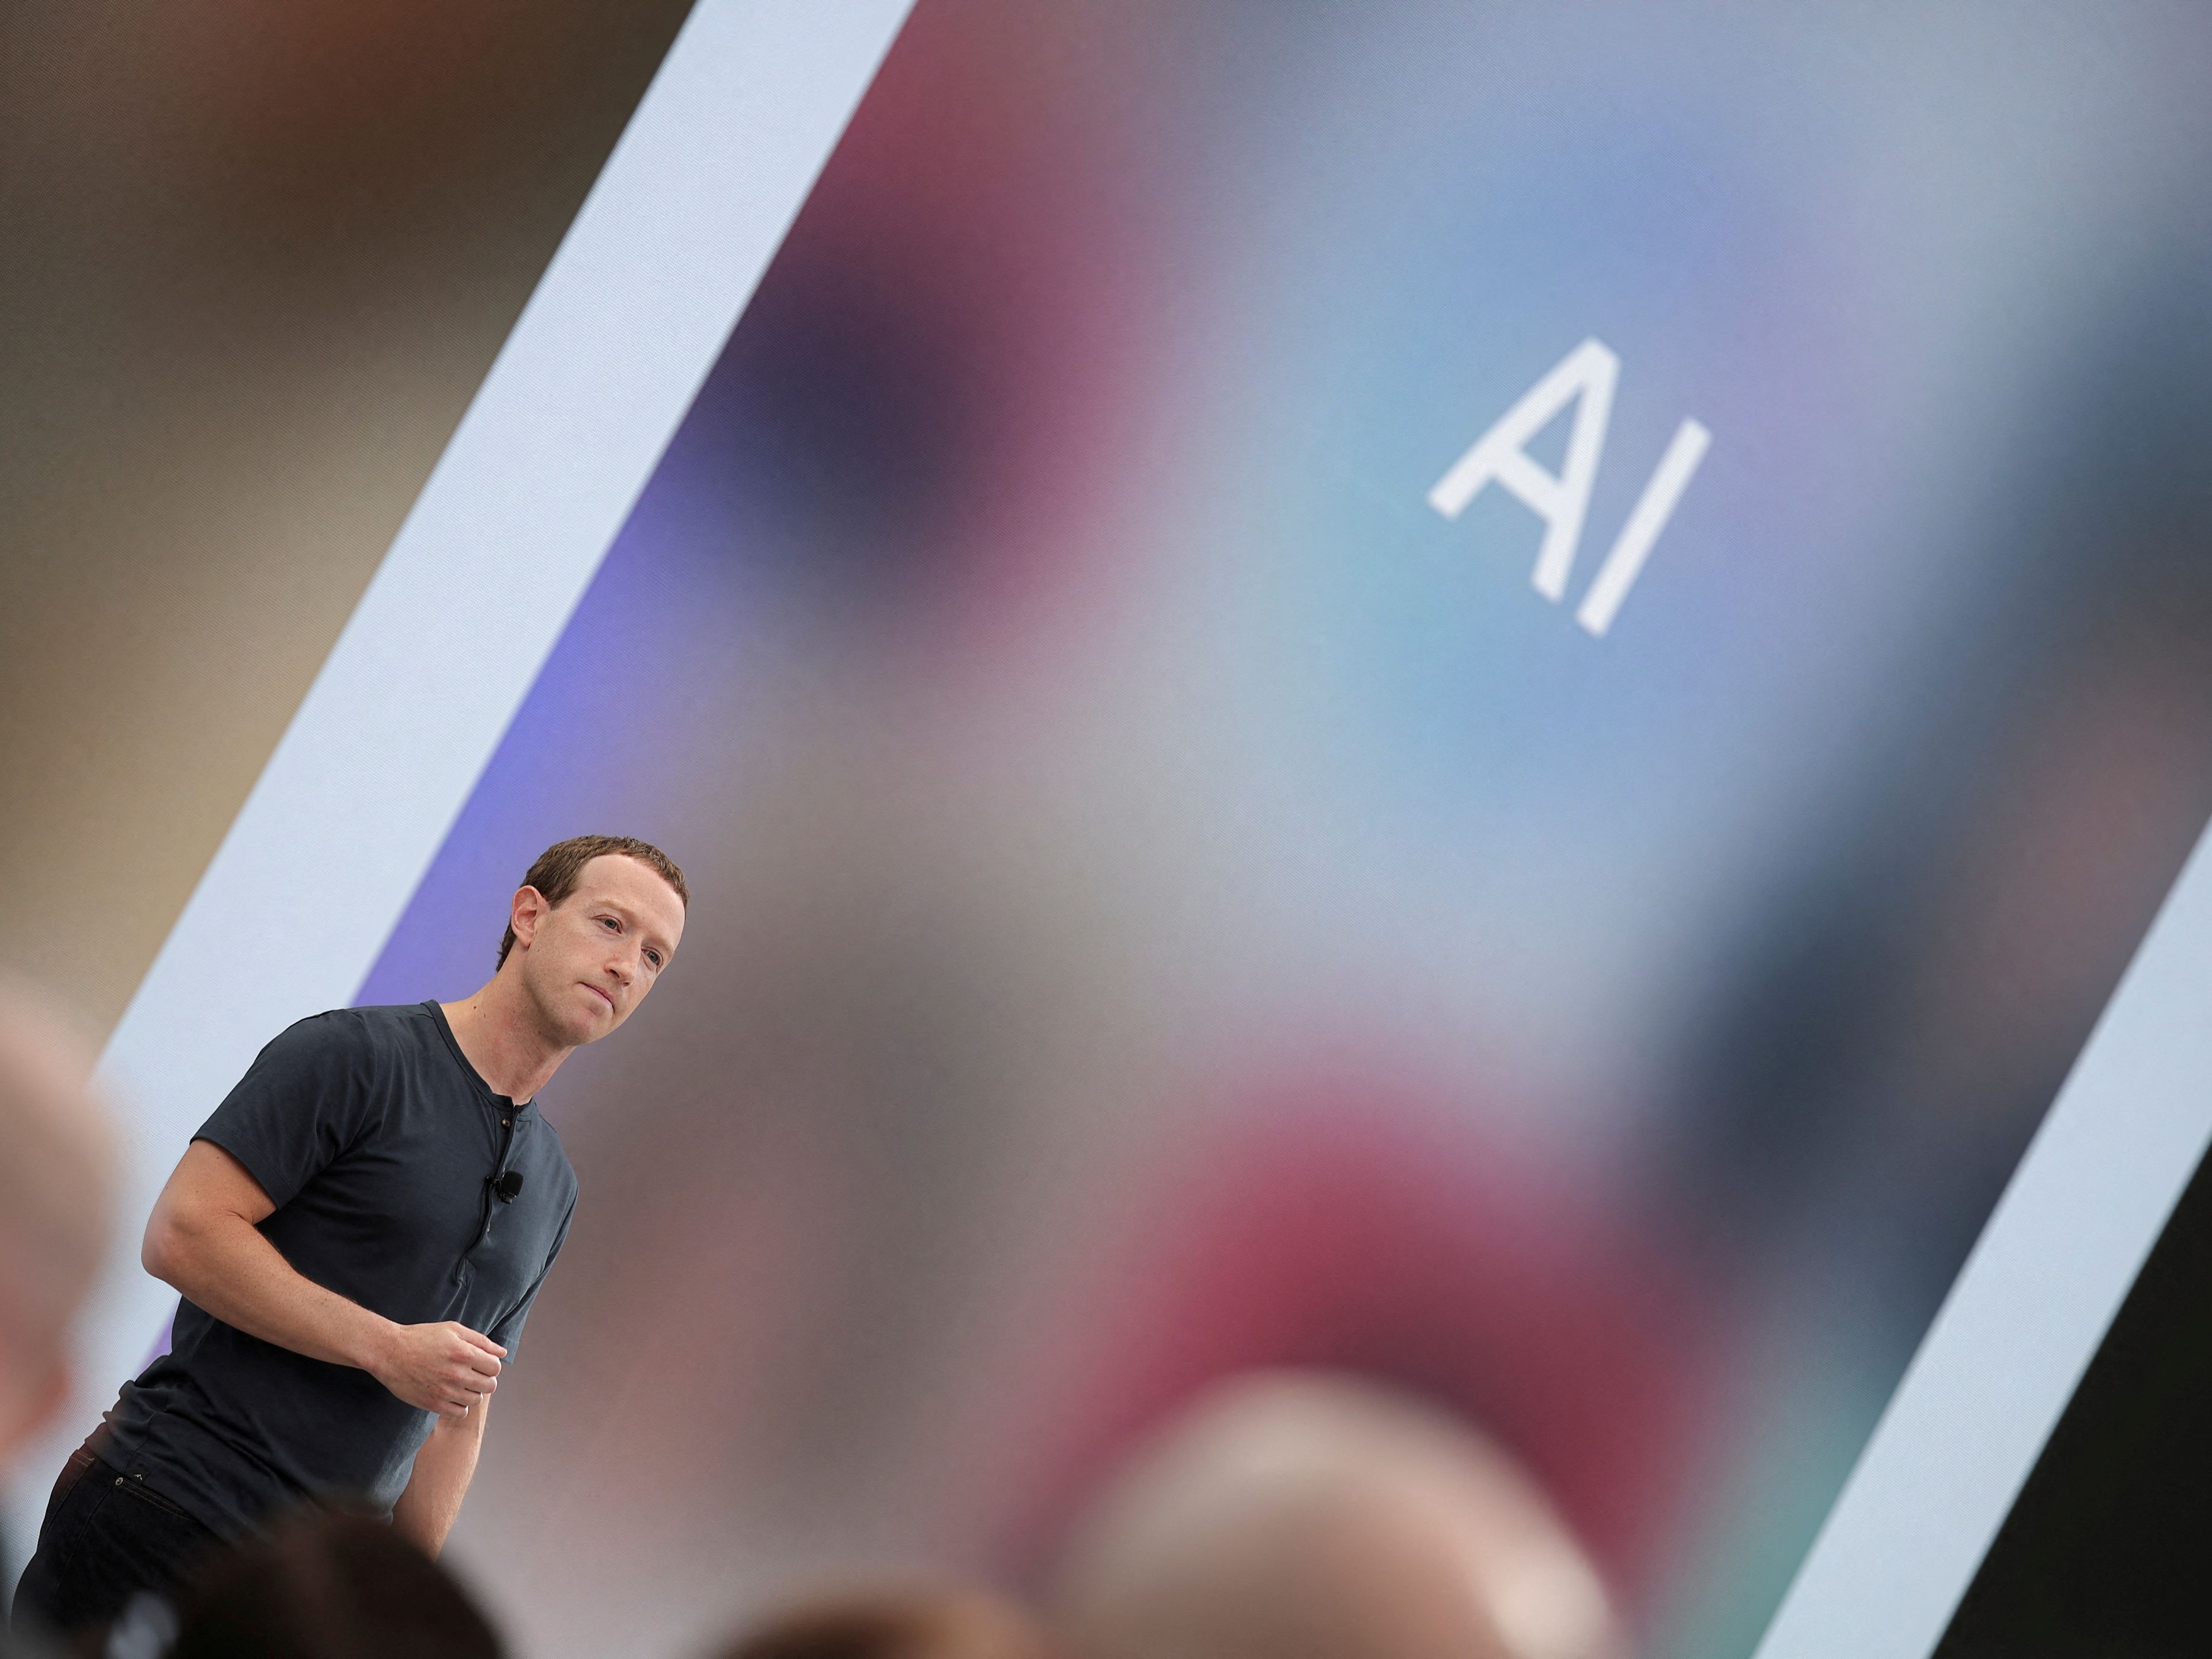 Mark Zuckerberg, CEO de Meta, pronuncia un discurso mientras aparecen en pantalla las letras AI de inteligencia artificial.